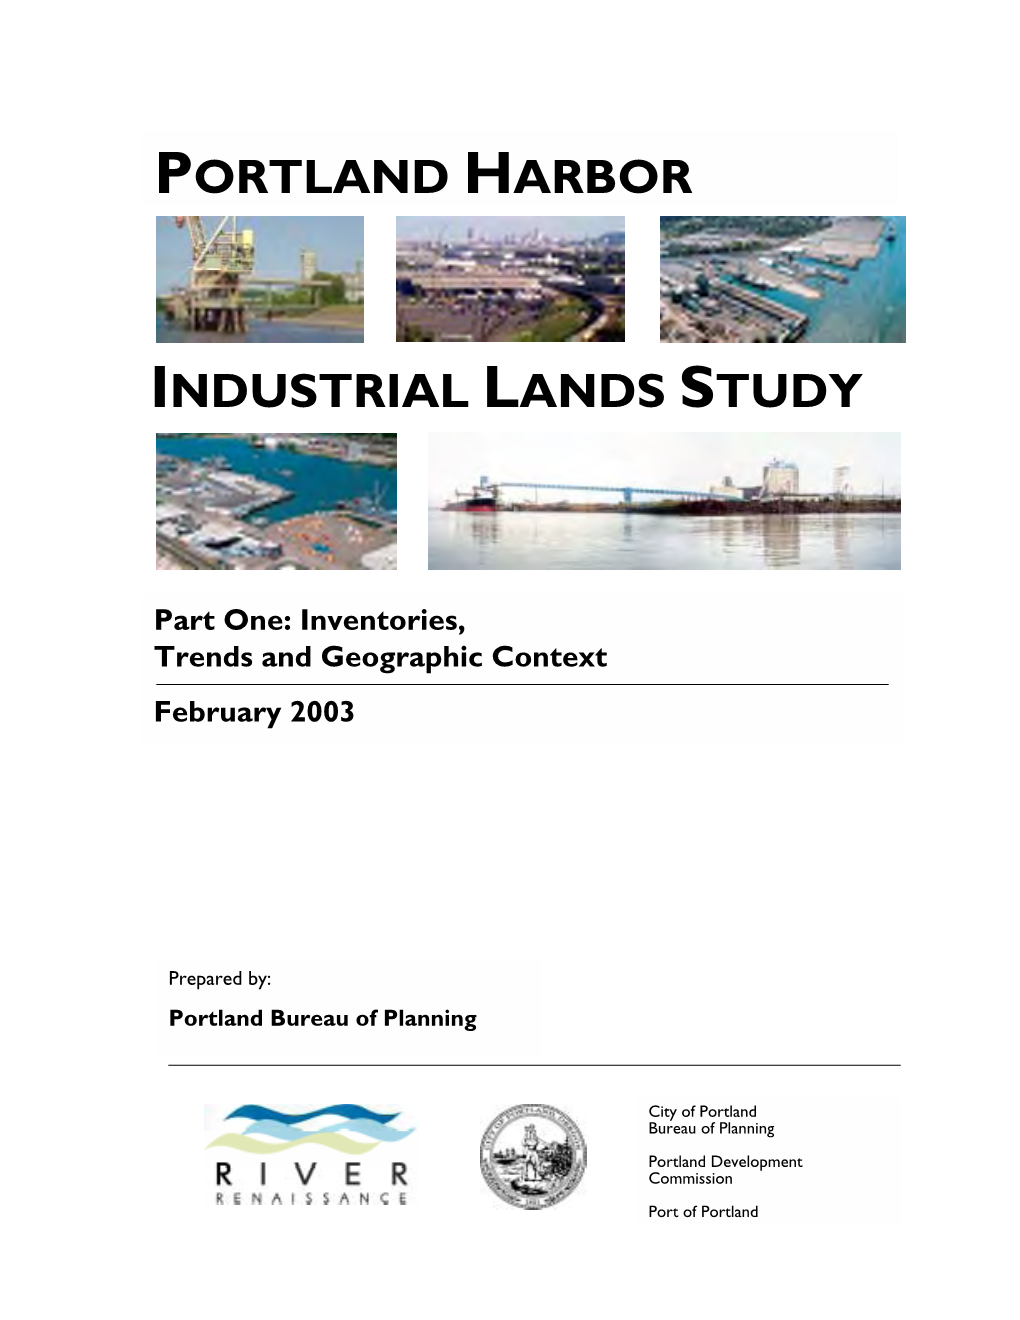 Portland Harbor Industrial Lands Study, Please Contact